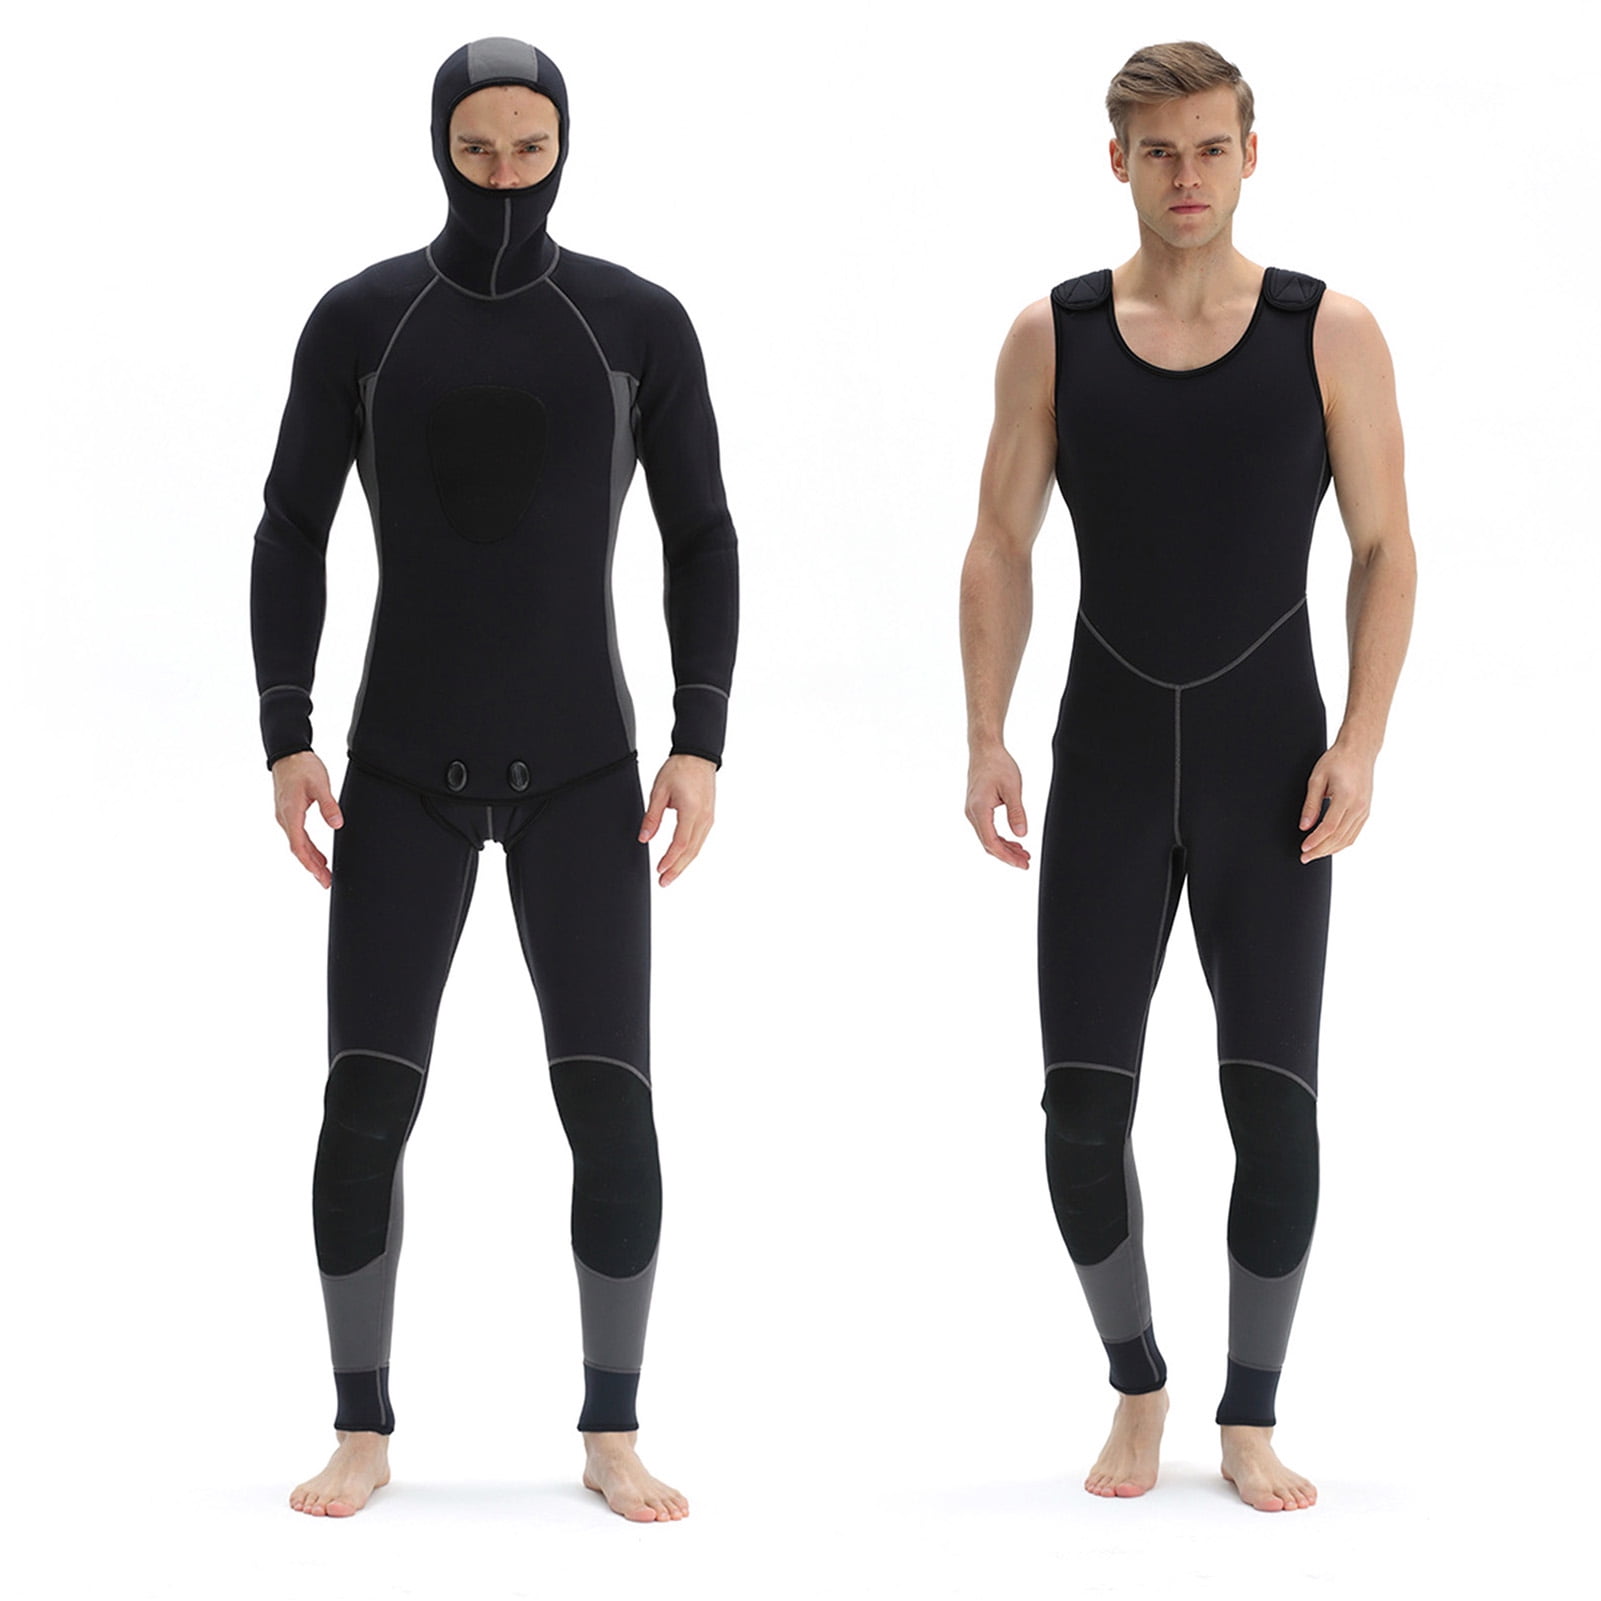 Details about   3mm Neoprene Wetsuit Men Swumsuit Surfing Swimming Diving Suit Wet Suit Swimsuit 